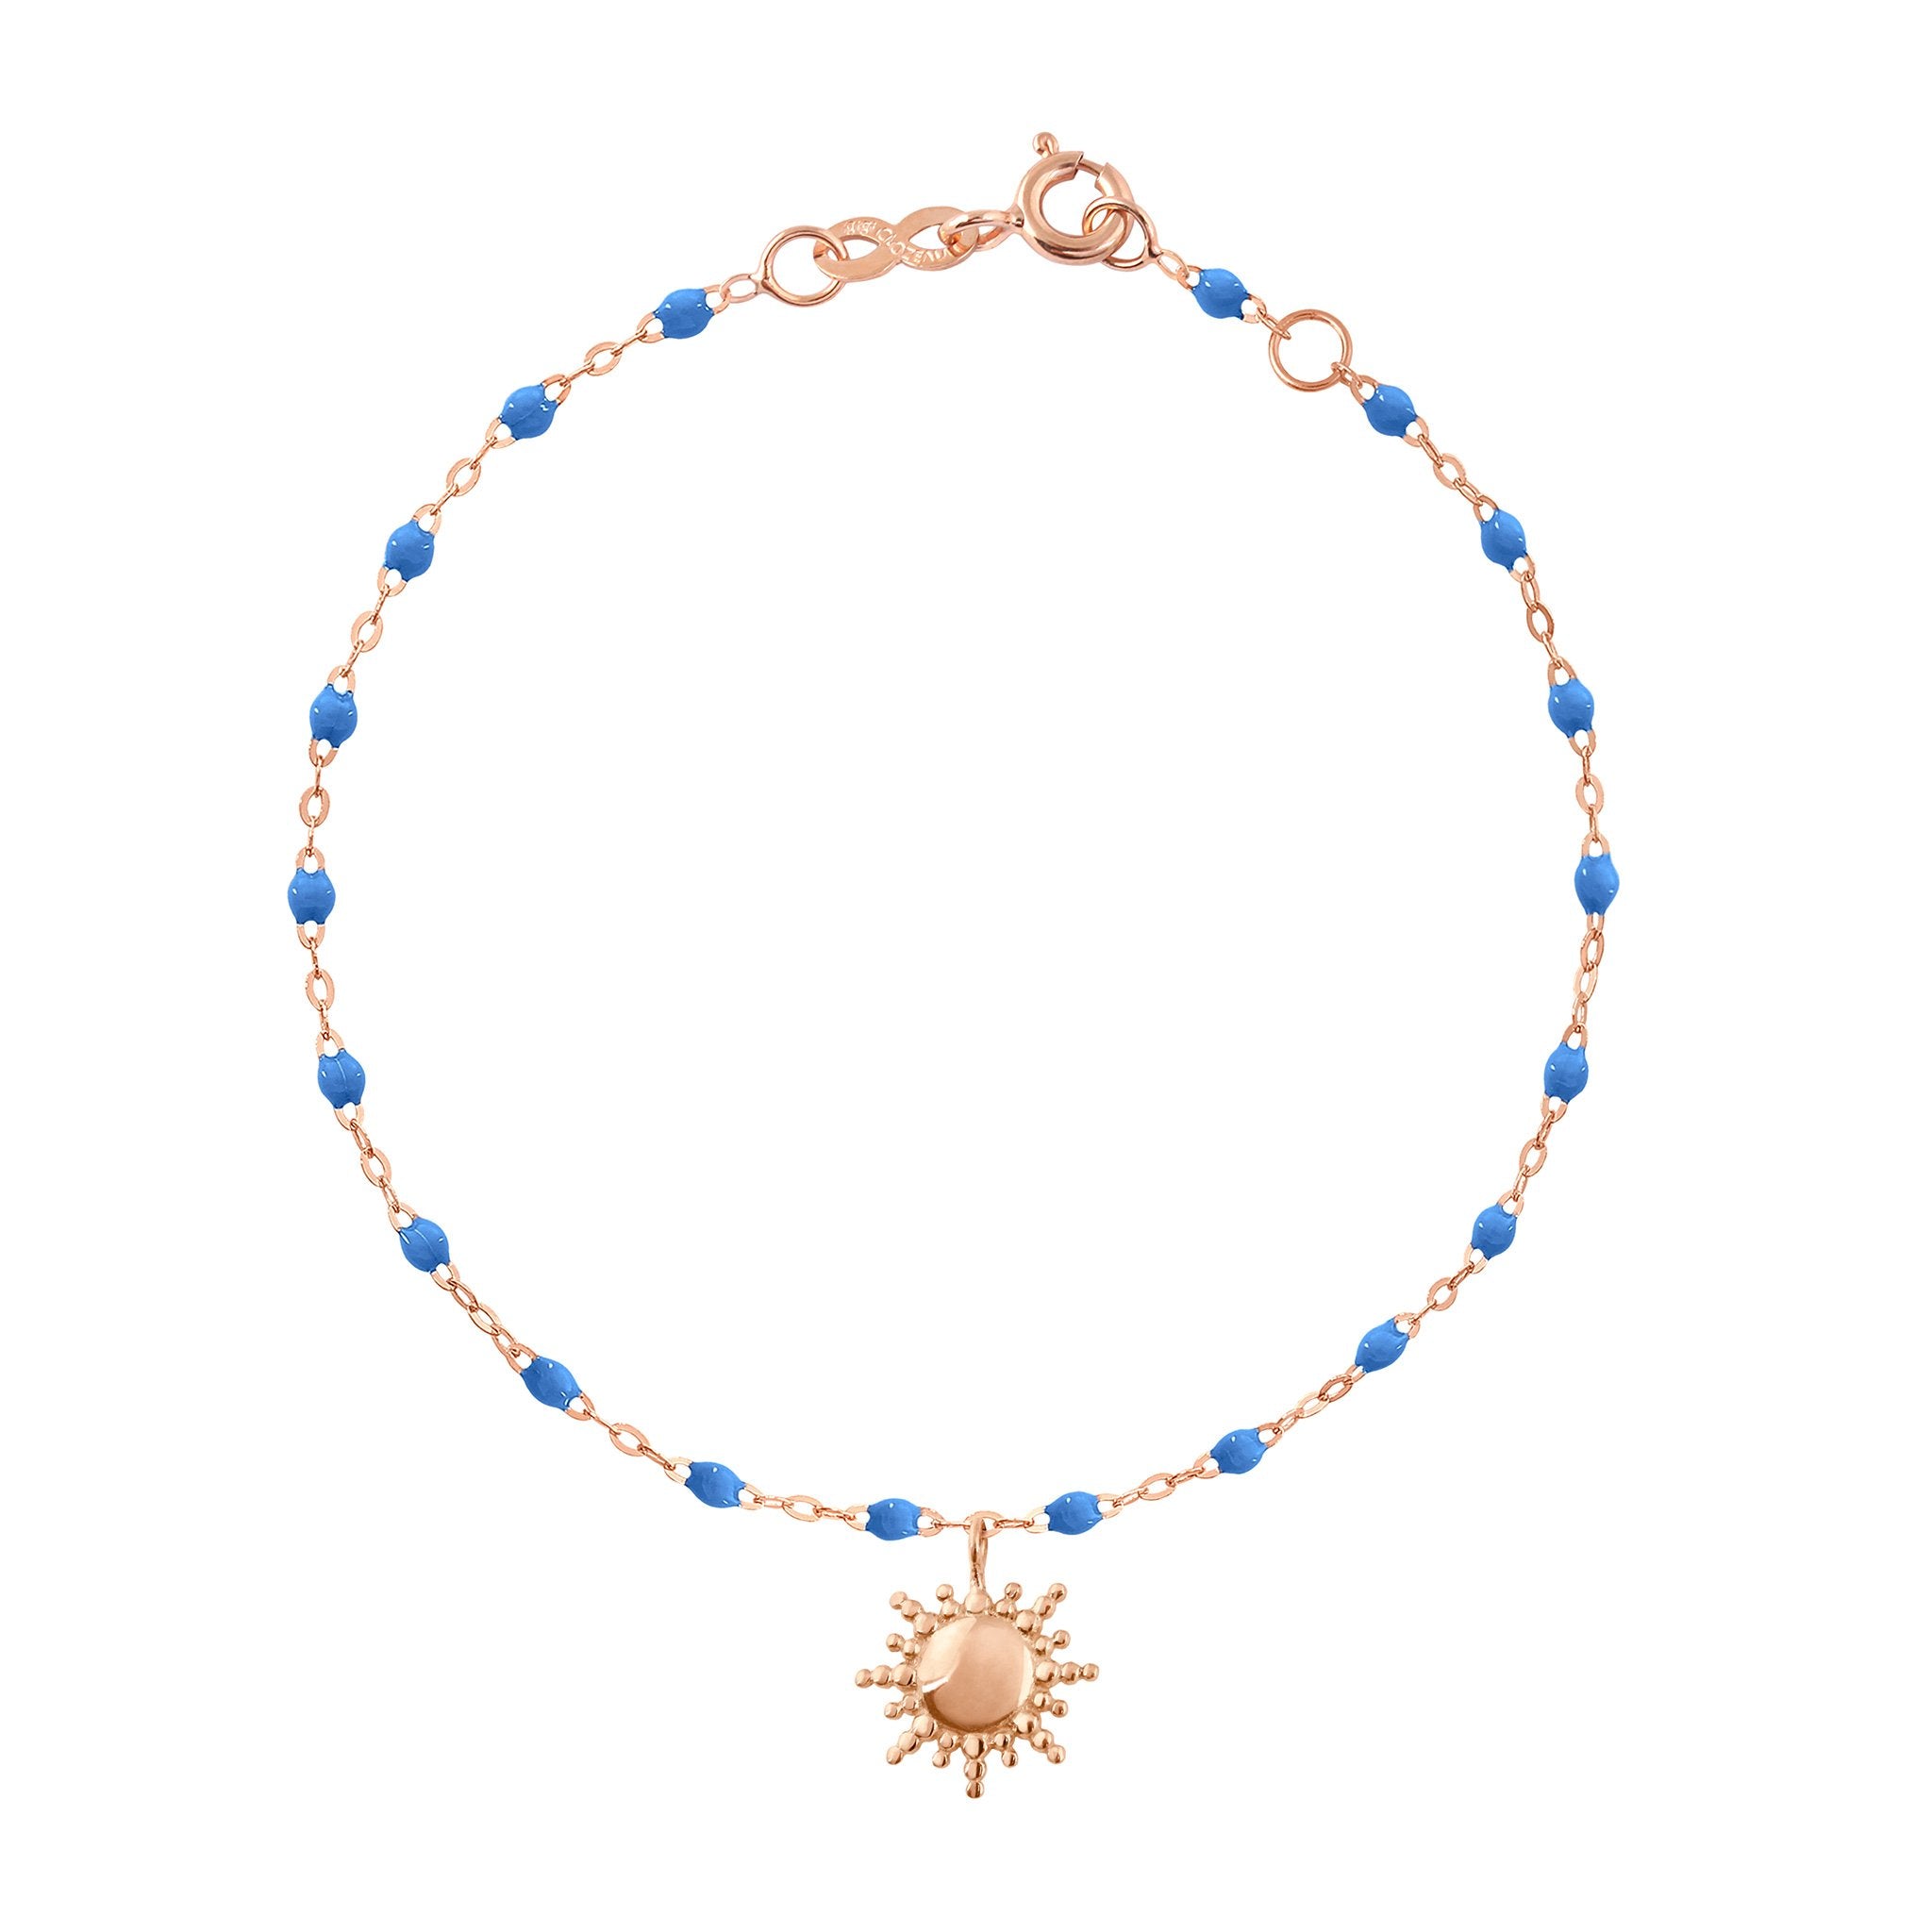 Bracelet bleu fluo Soleil, or rose, 17 cm pirate Référence :  b3so001r0417xx -1